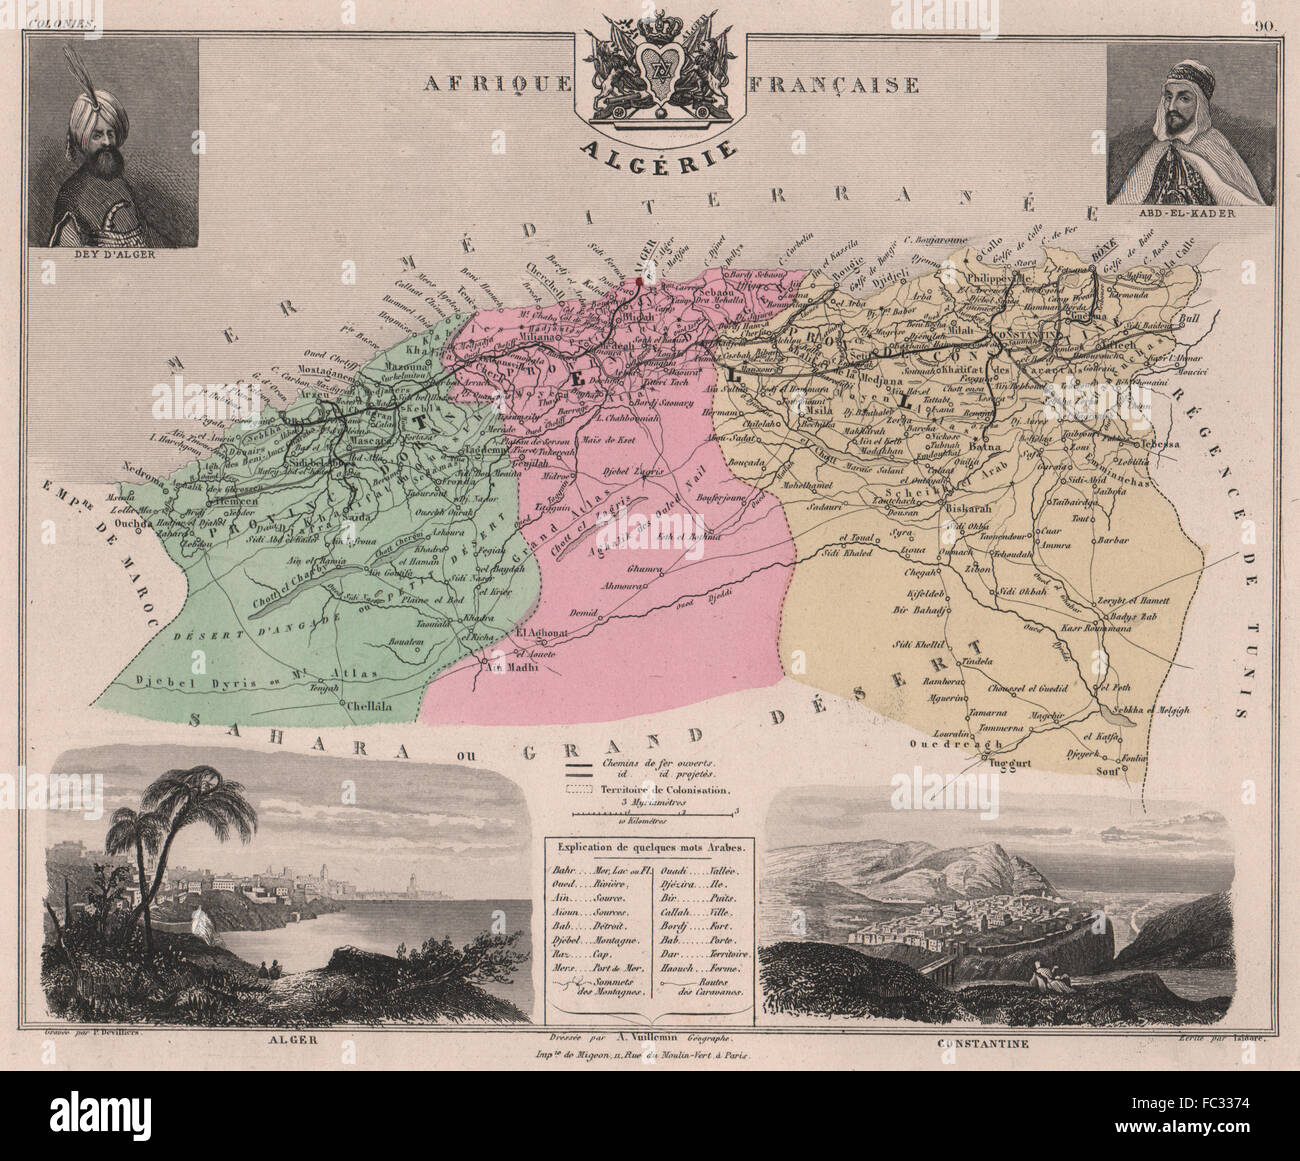 In Algeria. "Algérie'. Costantino. Dey d'Alger. Abd el-Kader. VUILLEMIN, 1879 Mappa Foto Stock